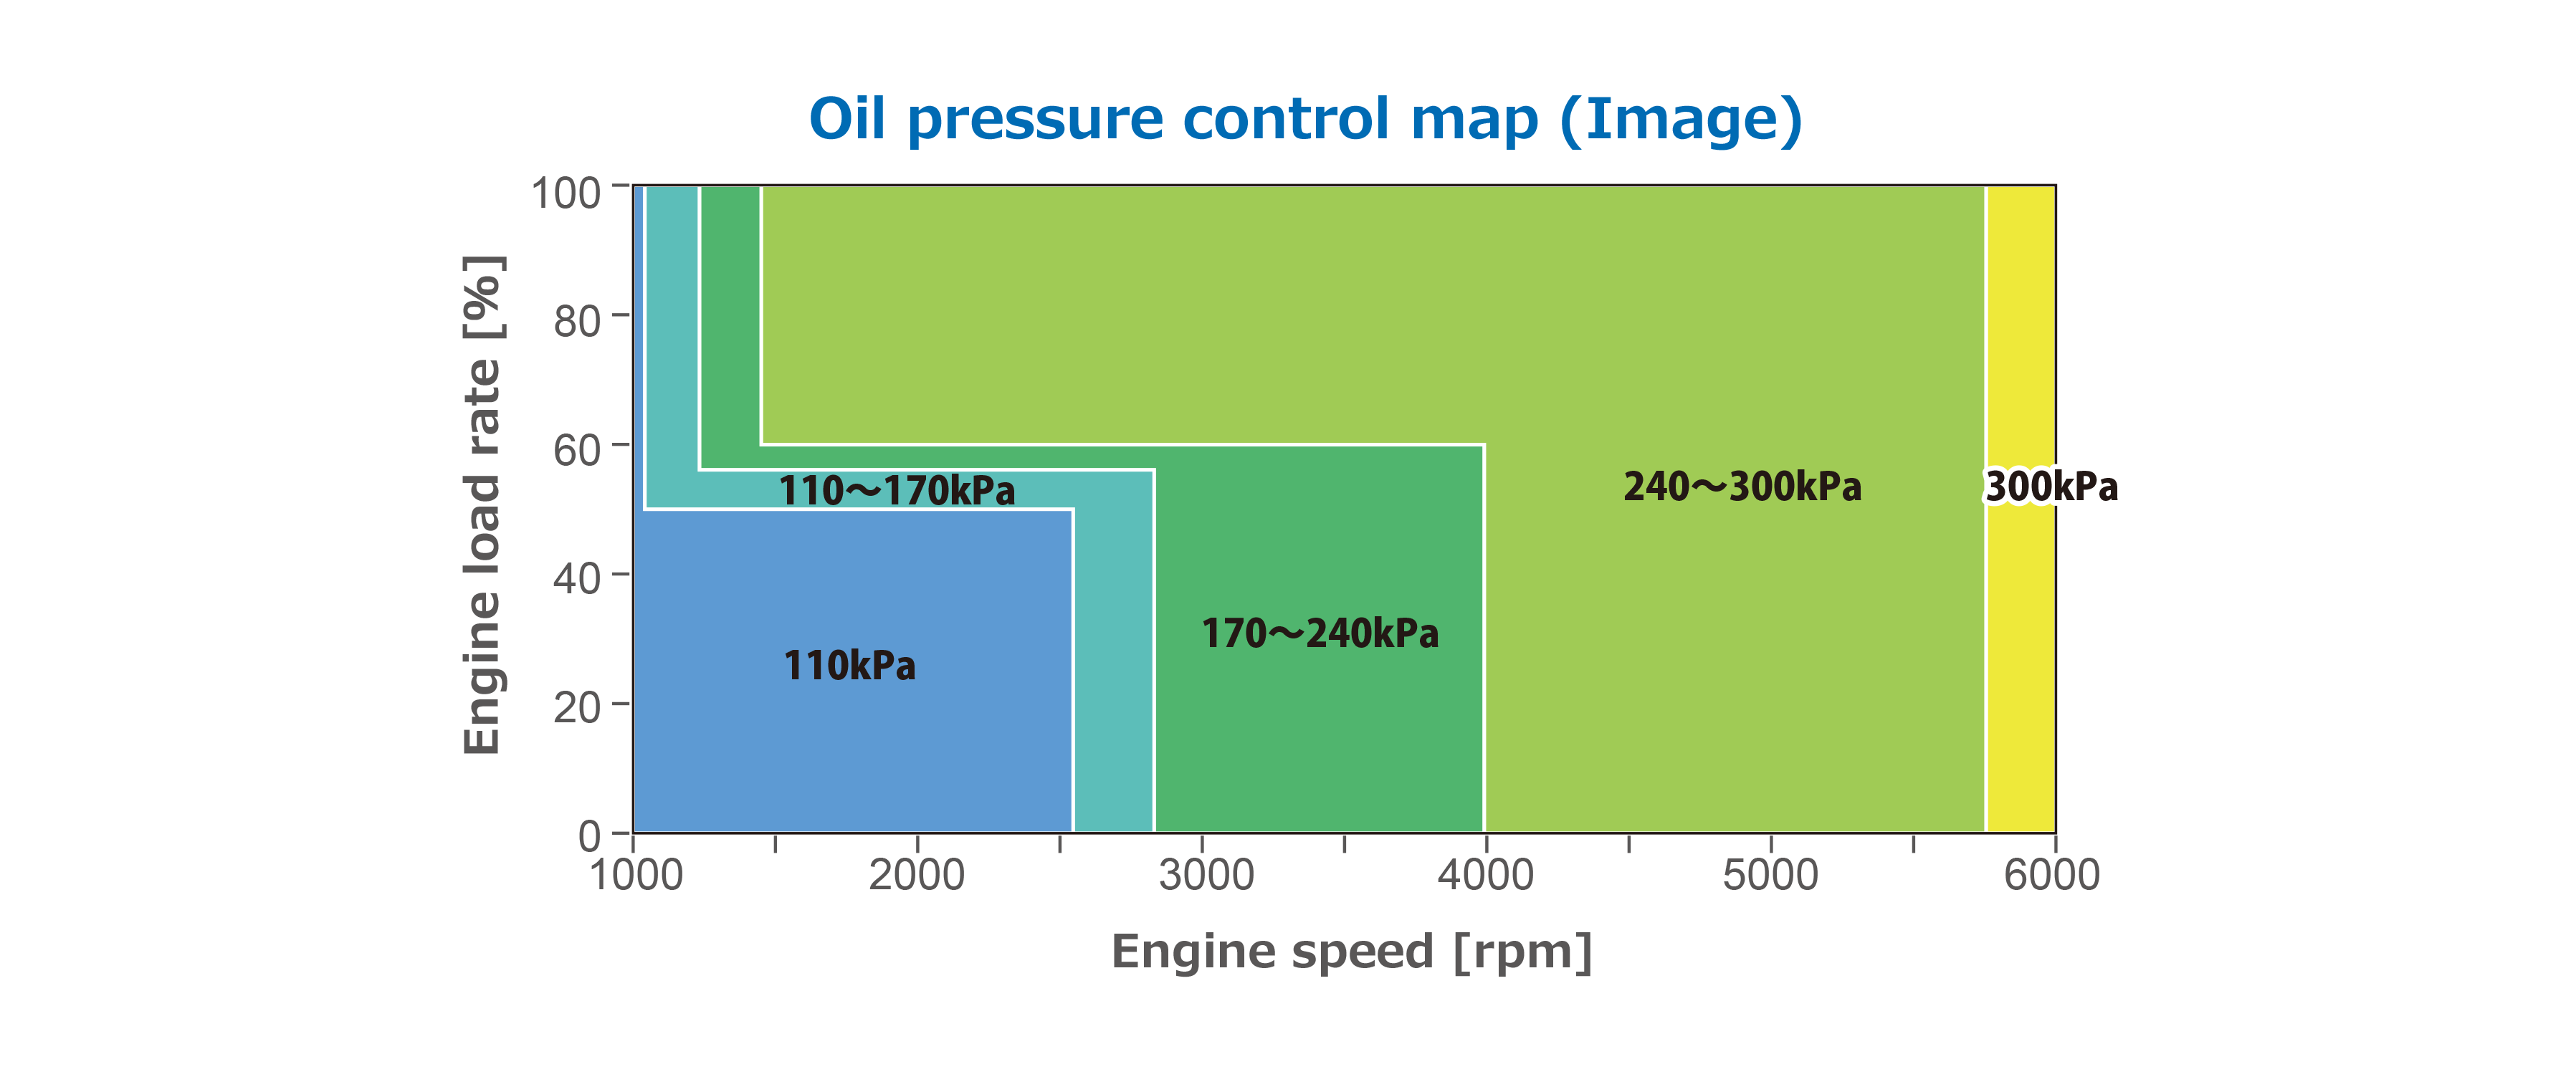 Oil pressure control map (Image)